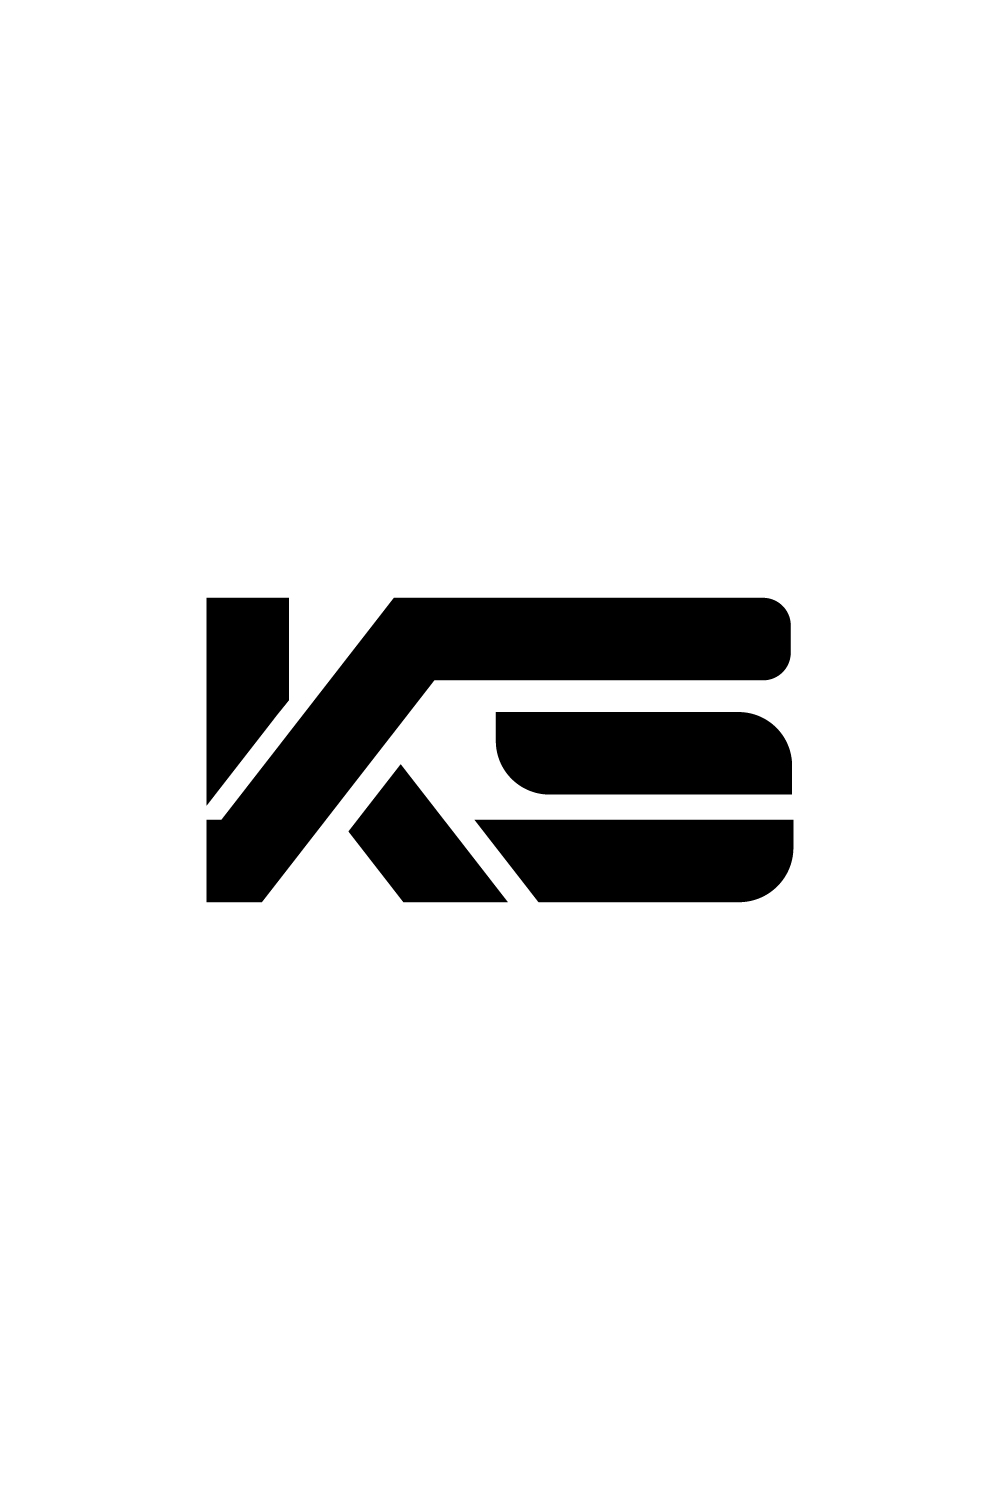 KS Logo by ElConsigliere on DeviantArt